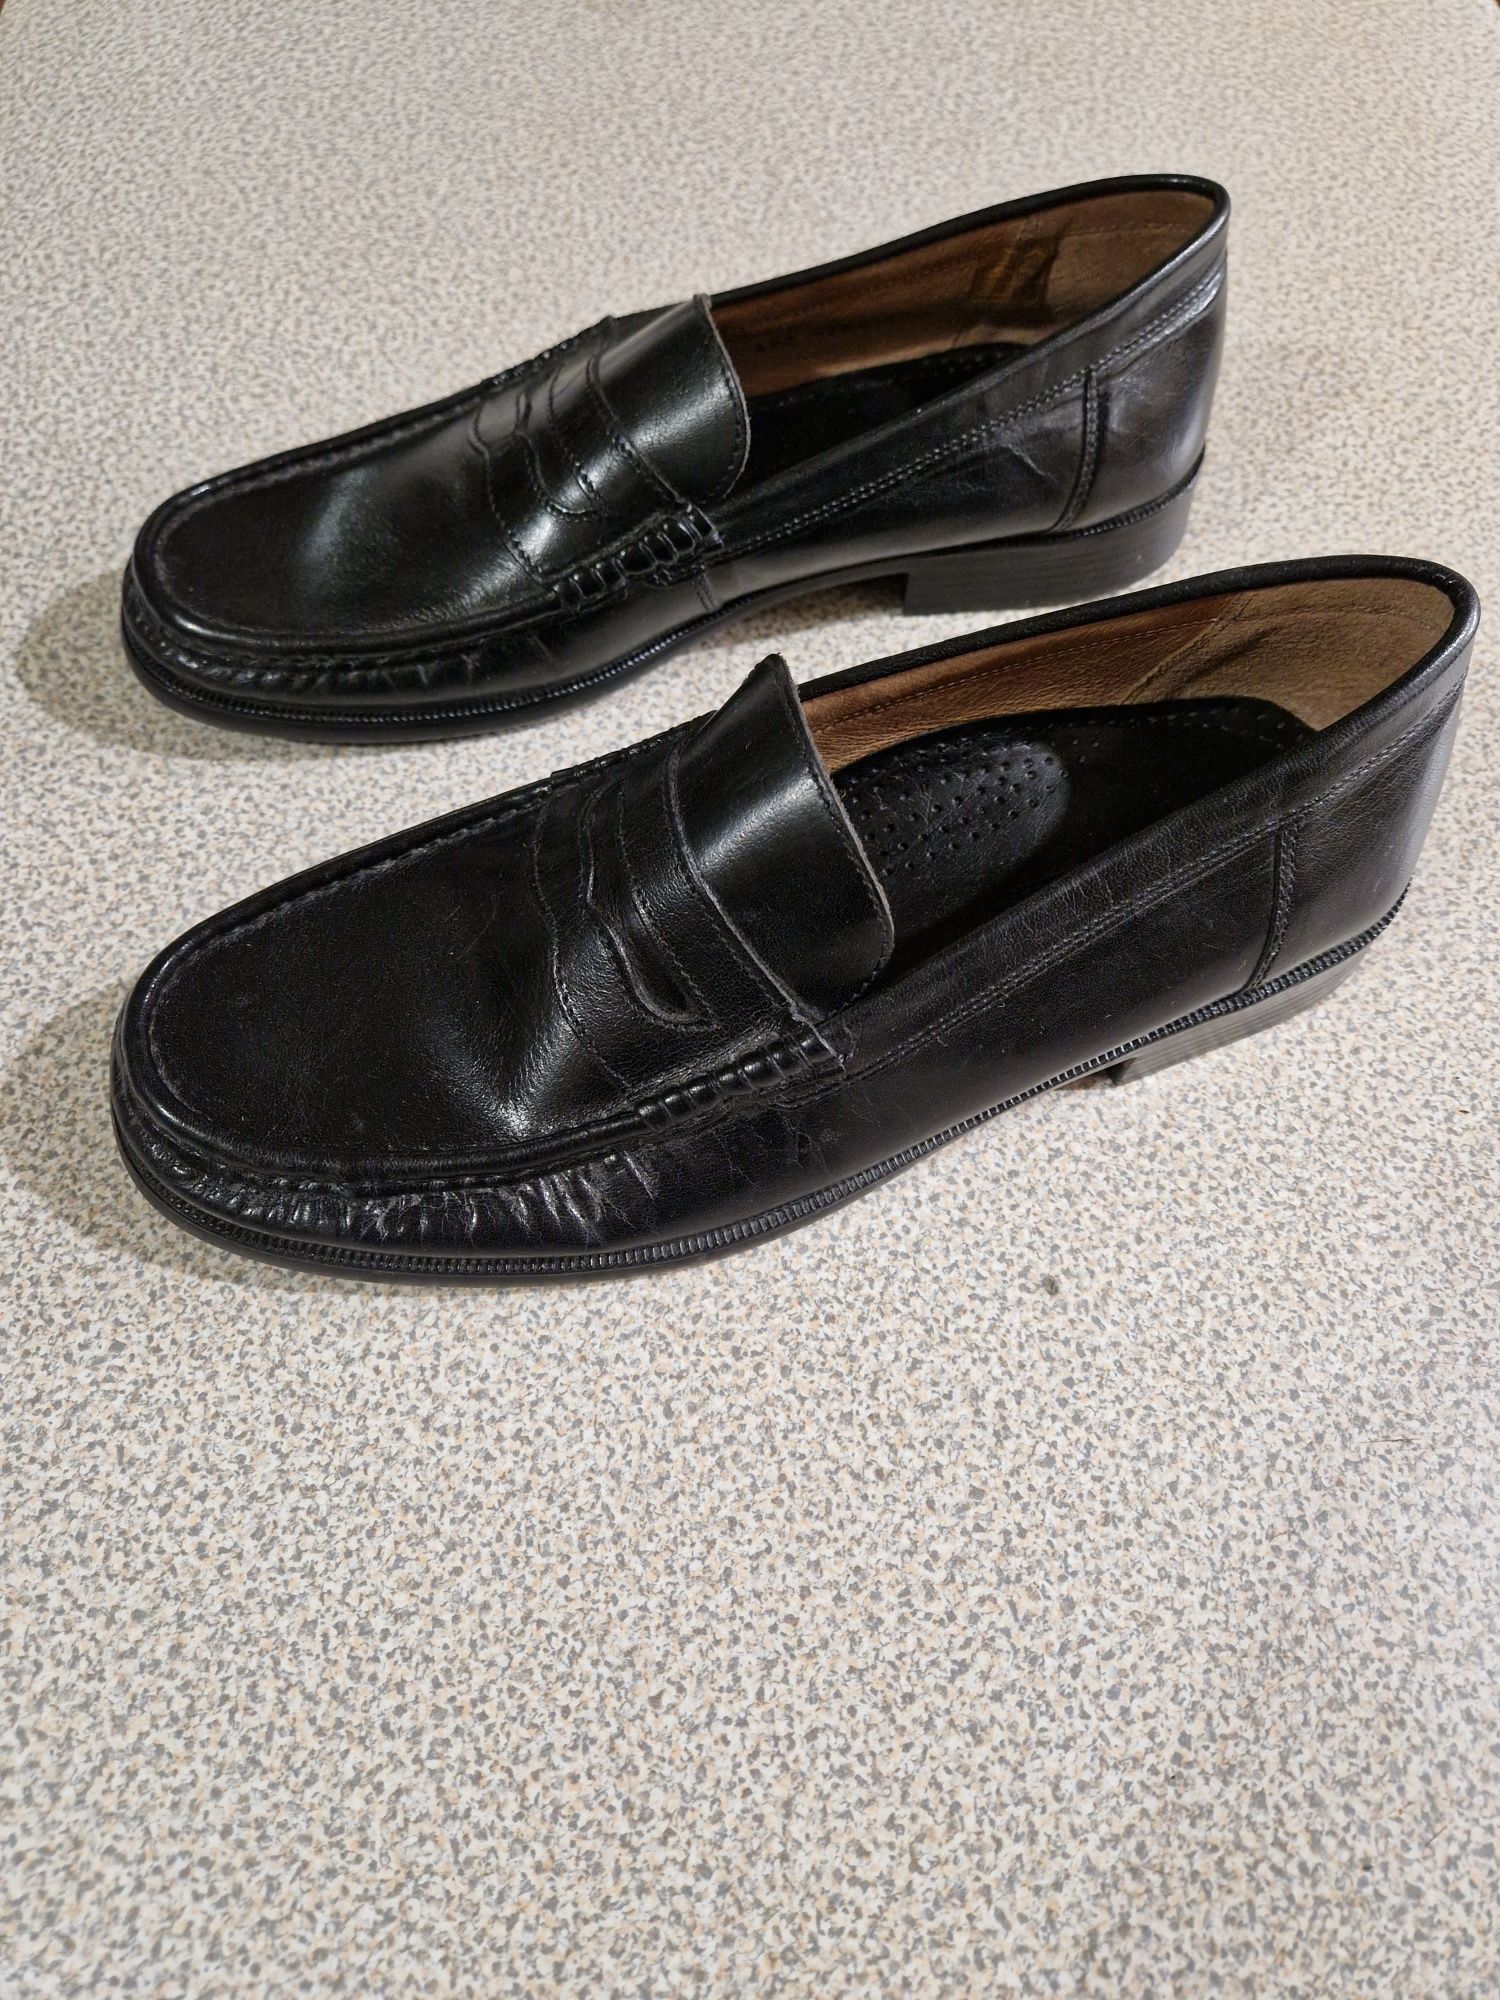 Мъжки маркови мокасини / обувки от естествена кожа - 44 / Чисто нови